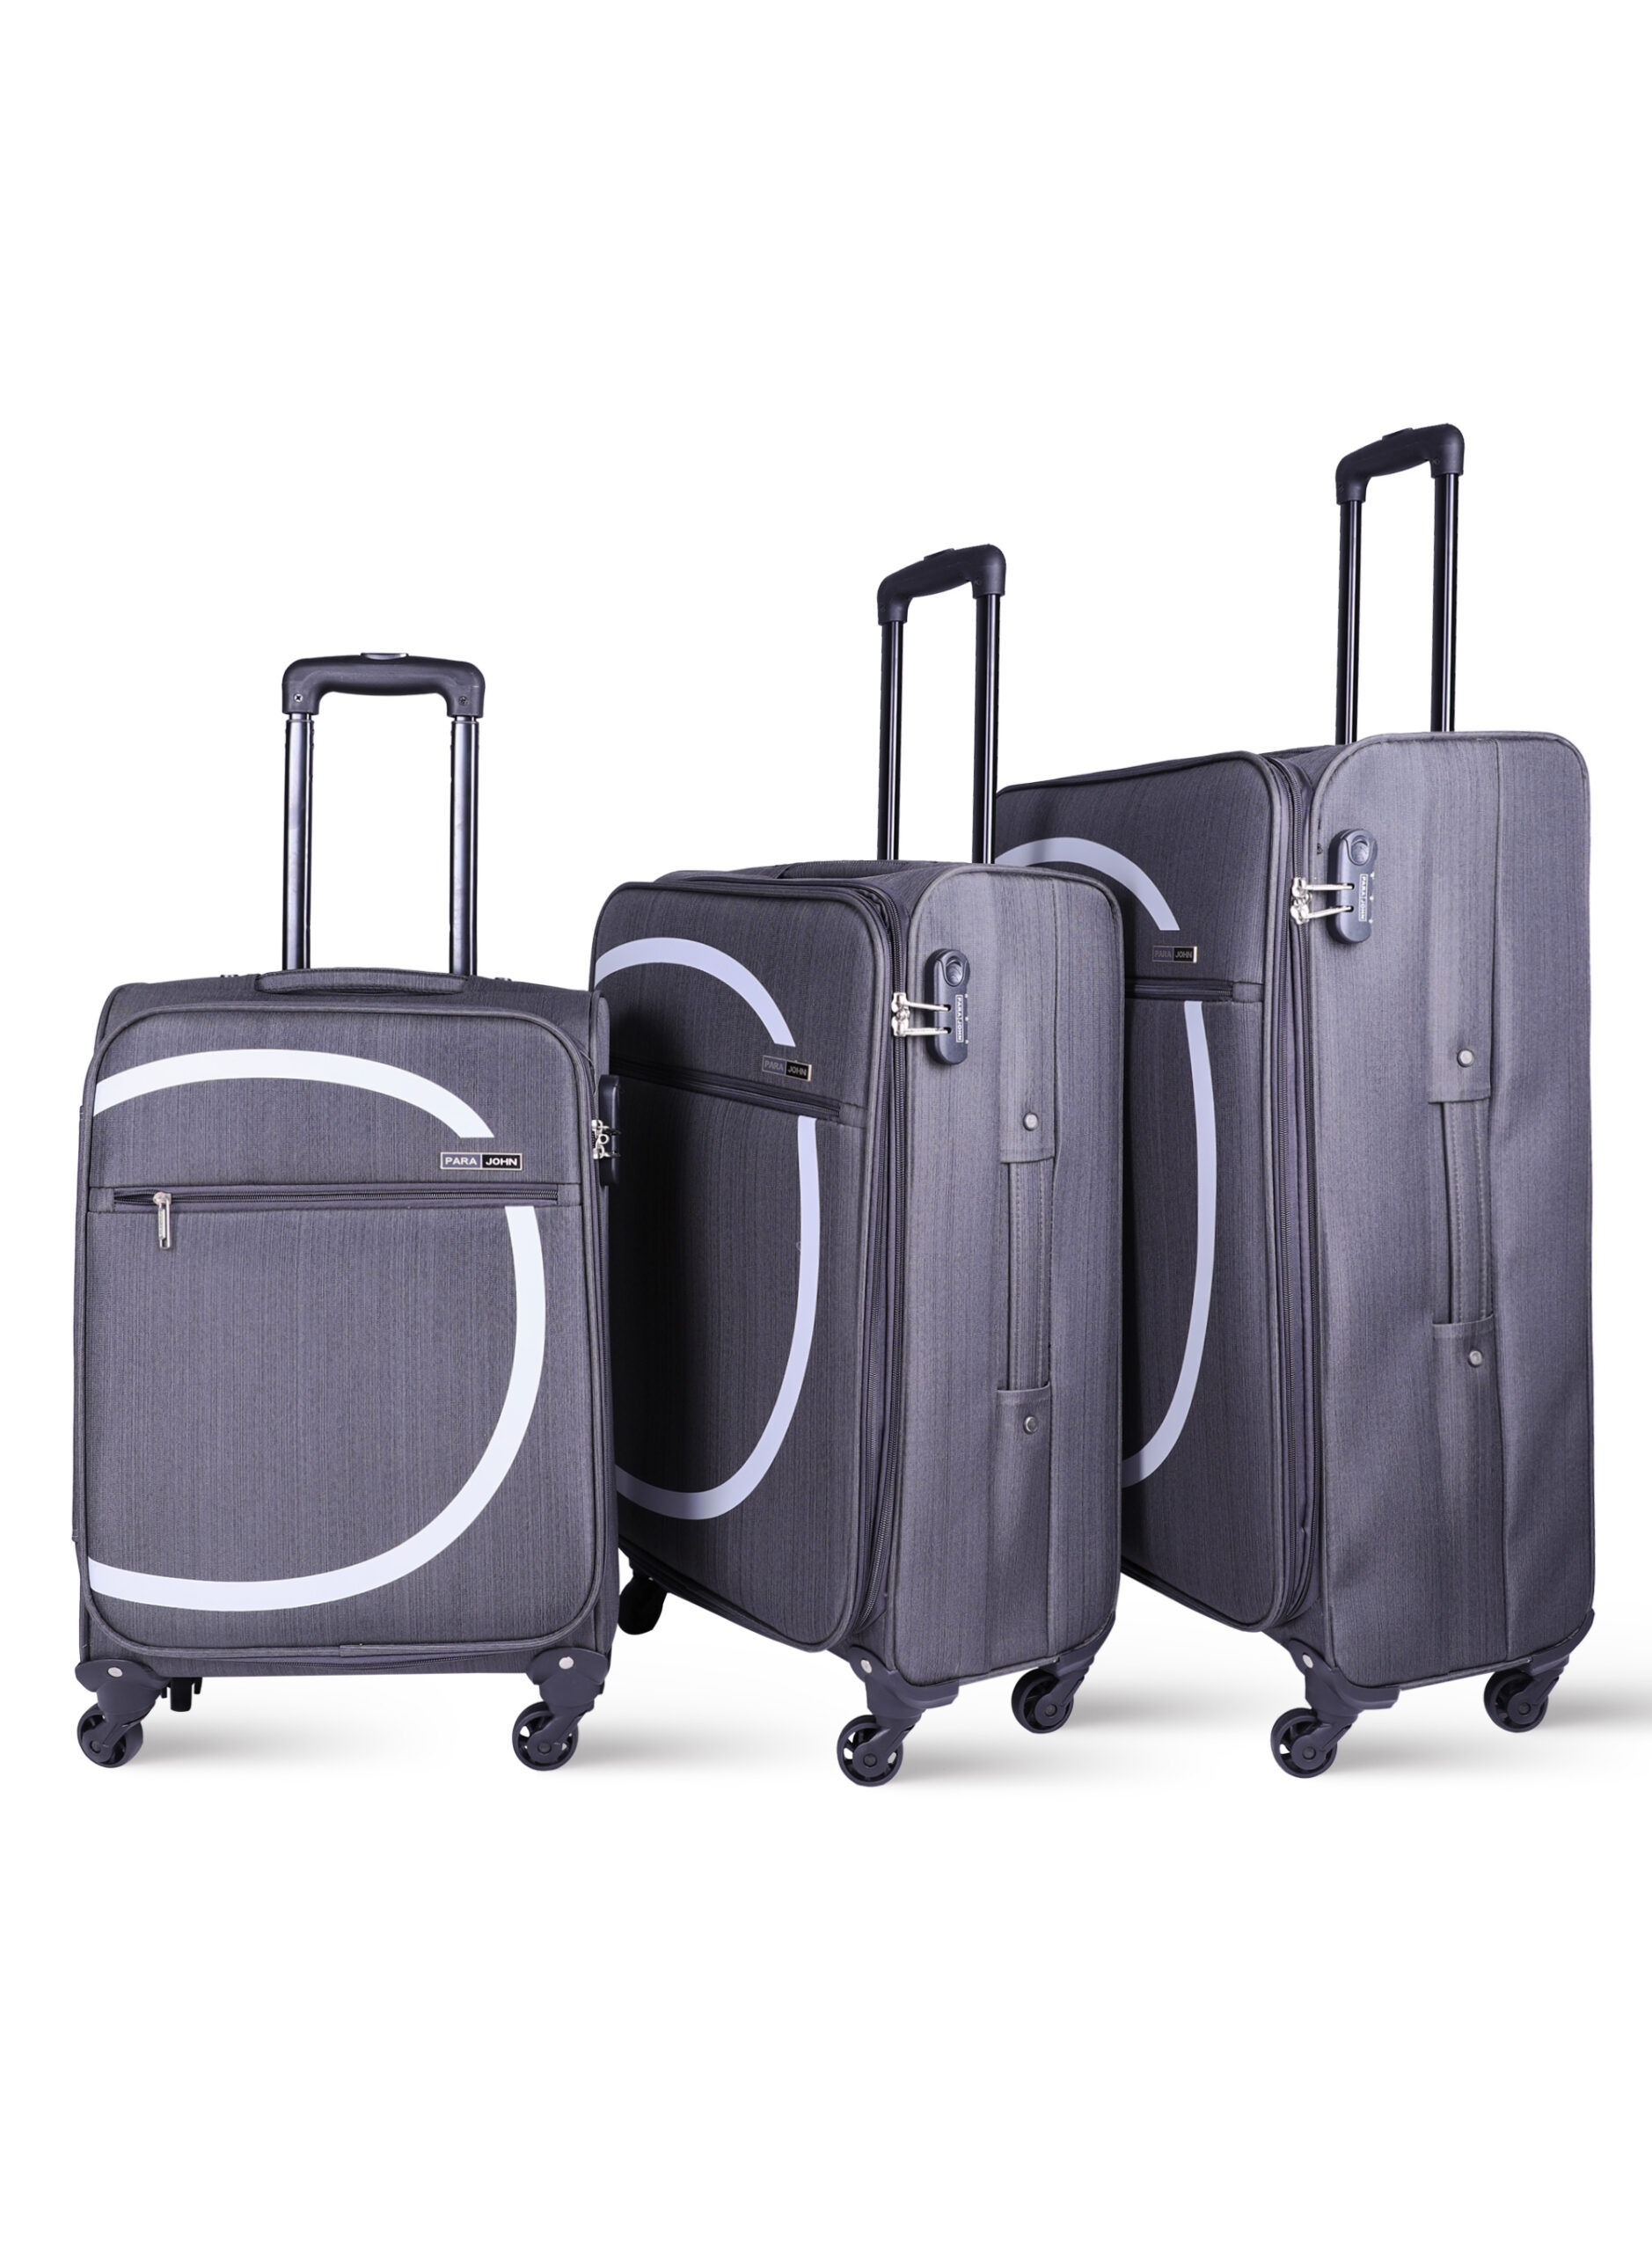 طقم حقائب سفر 3 حقائب مادة النايلون بعجلات دوارة (20 ، 24 ، 28) بوصة رمادي PARA JOHN - Travel Luggage Suitcase, Set of 3 - Trolley Bag, Carry On Hand Cabin Luggage Bag - Lightweight (20 ، 24 ، 28) inch